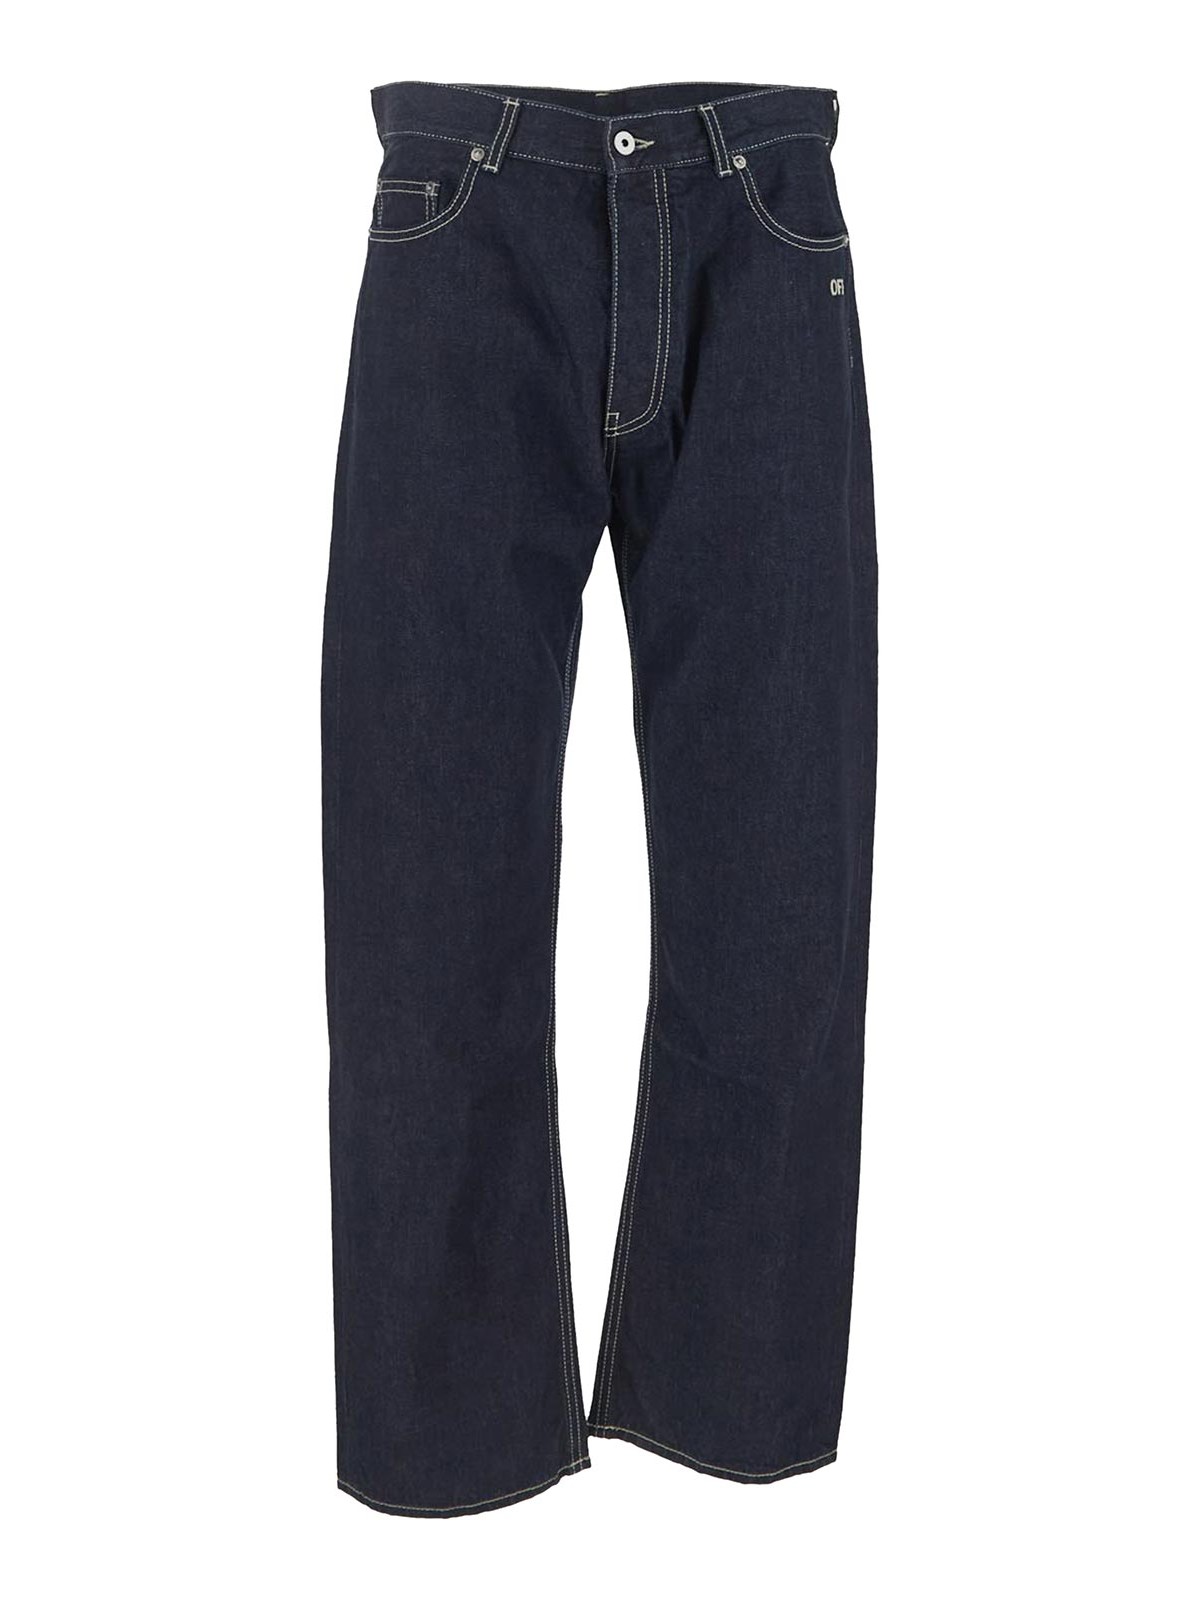 NWT OFF-WHITE Sz. 28 Virgil Abloh Blue Light Wash Skinny Denim Jeans $605  Italy